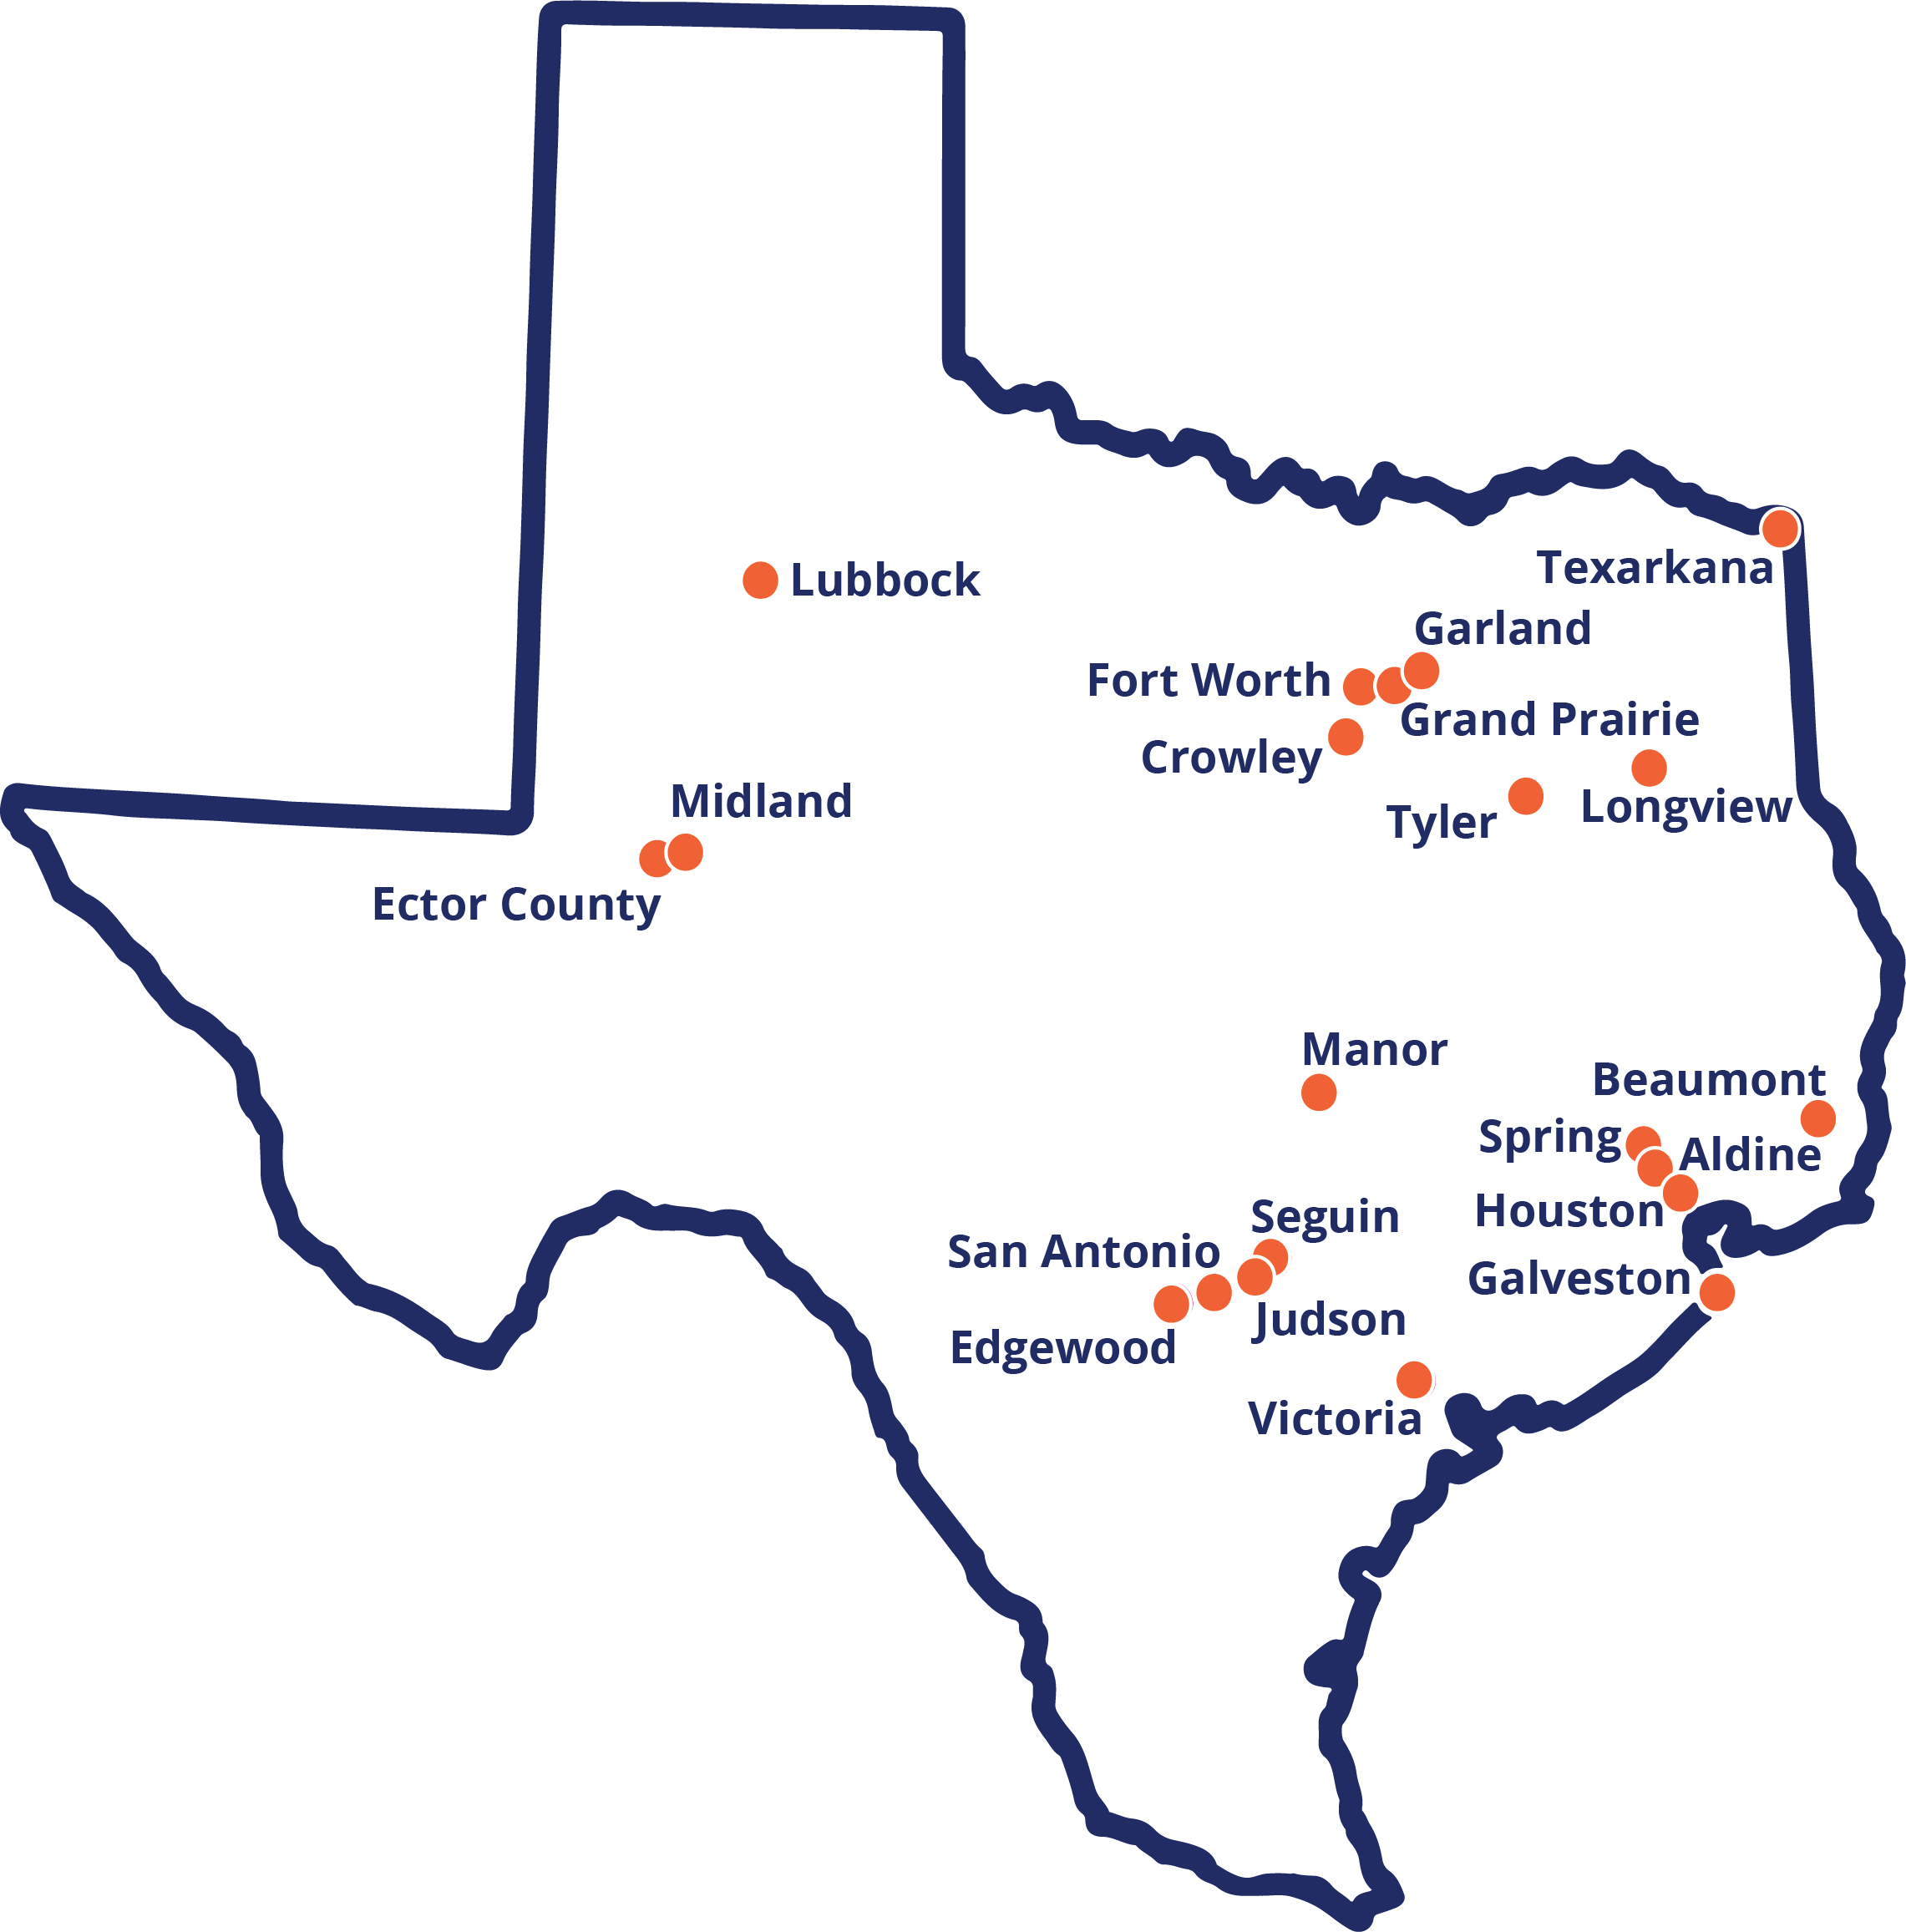 Map of Texas with 21 SGS Districts represented including: Lubbock, Midland, Ector County, Texarkana, Garland, Fort Worth, Grand Prairie, Crowley, Tyler, Longview, Manor, Beaumont, Spring, Aldine, Houston, Galveston, Seguin, San Antonio, Edgewood, Judson, Victoria